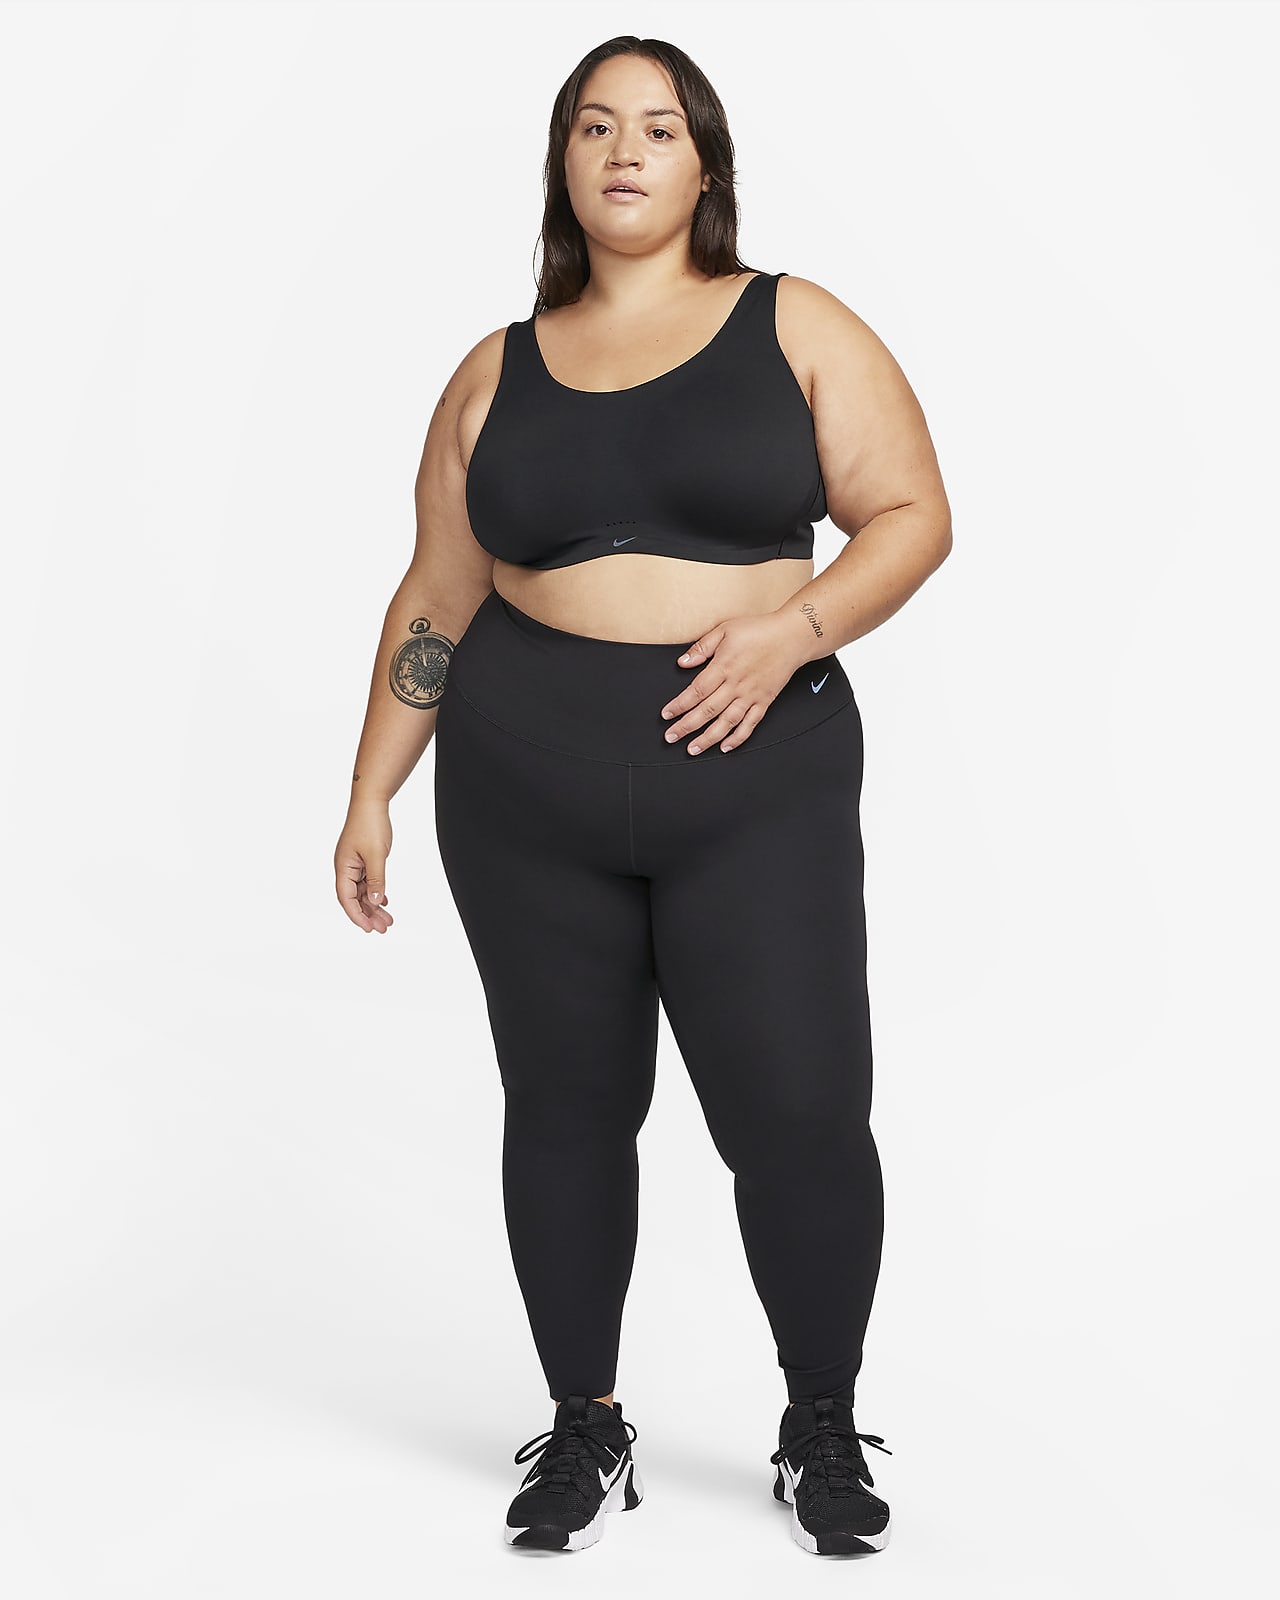 Nike Yoga Luxe Alate dri fit light support sports bra in black ombre